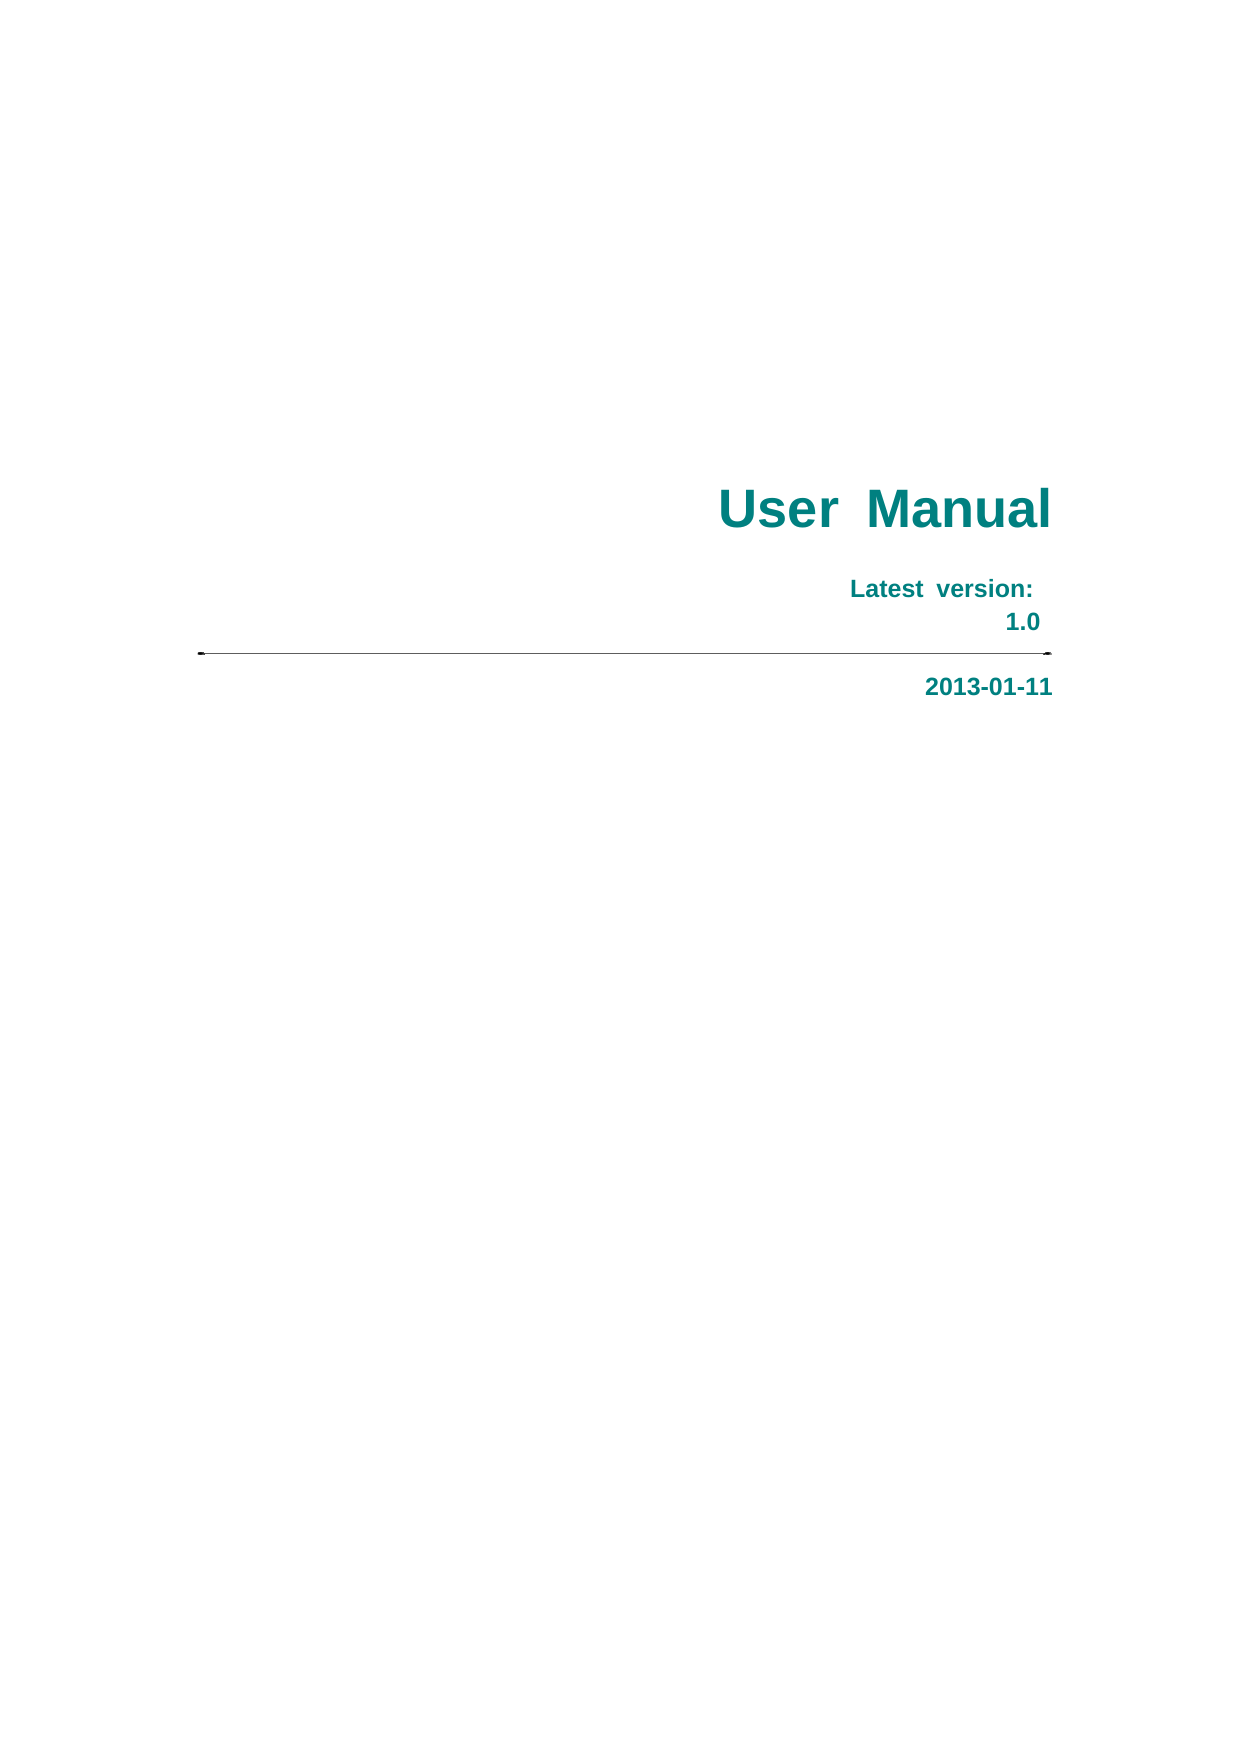           User Manual  Latest version: 1.0    2013-01-11 